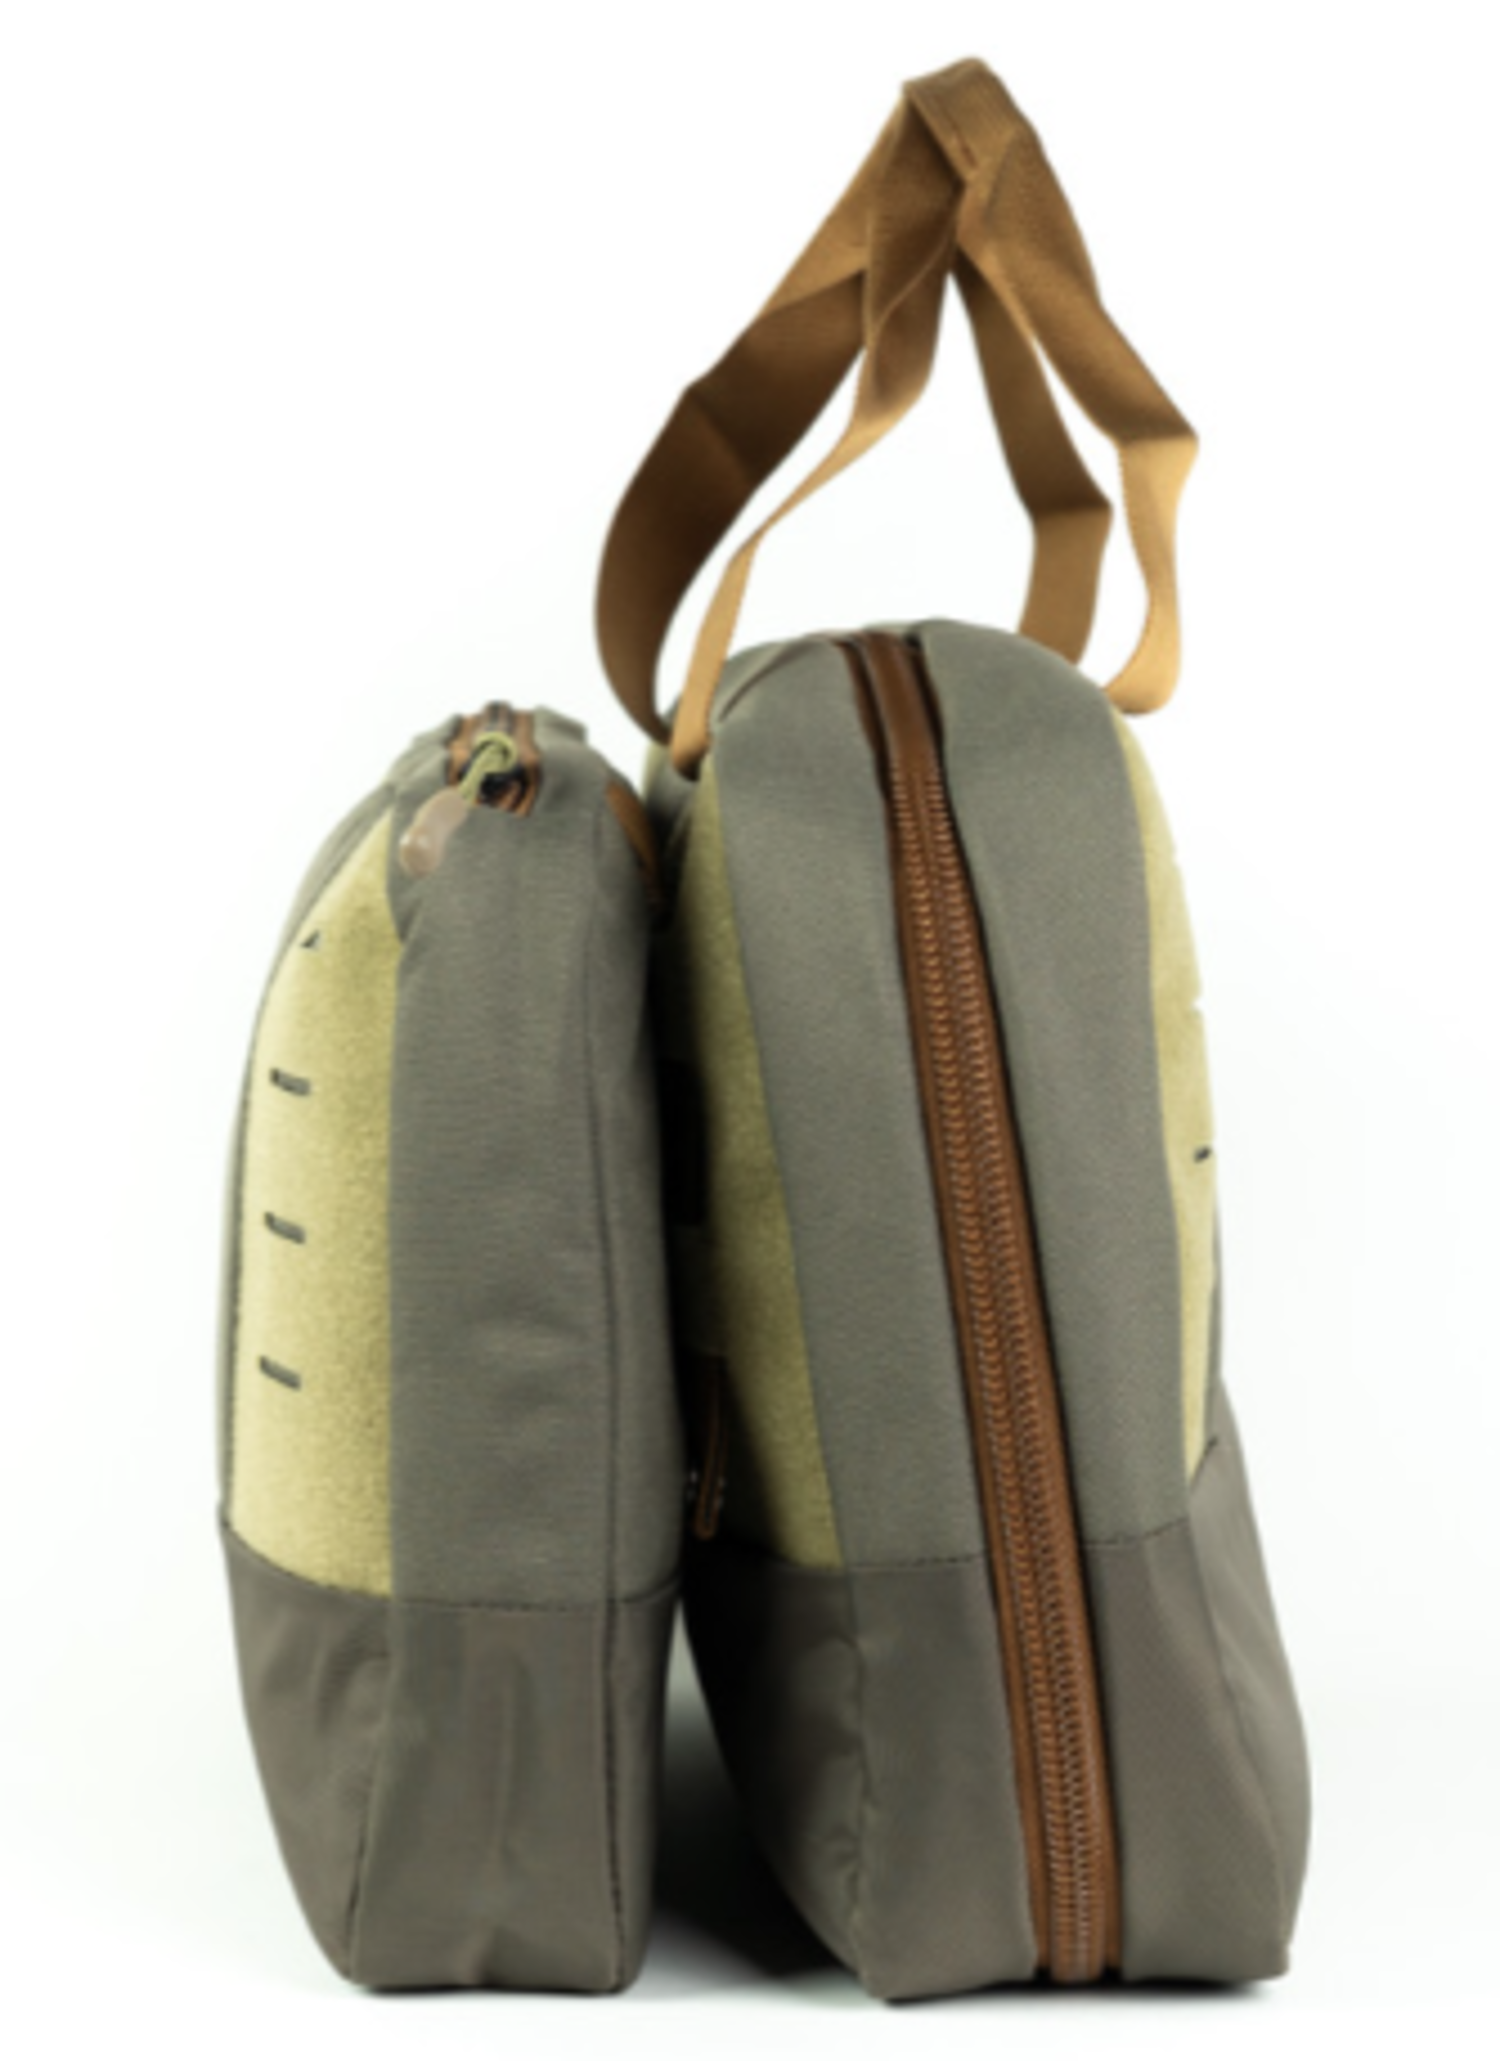 https://cdn.shoplightspeed.com/shops/666059/files/59536774/1500x4000x3/umpqua-zs2-traveler-fly-tying-kit-bag-olive.jpg